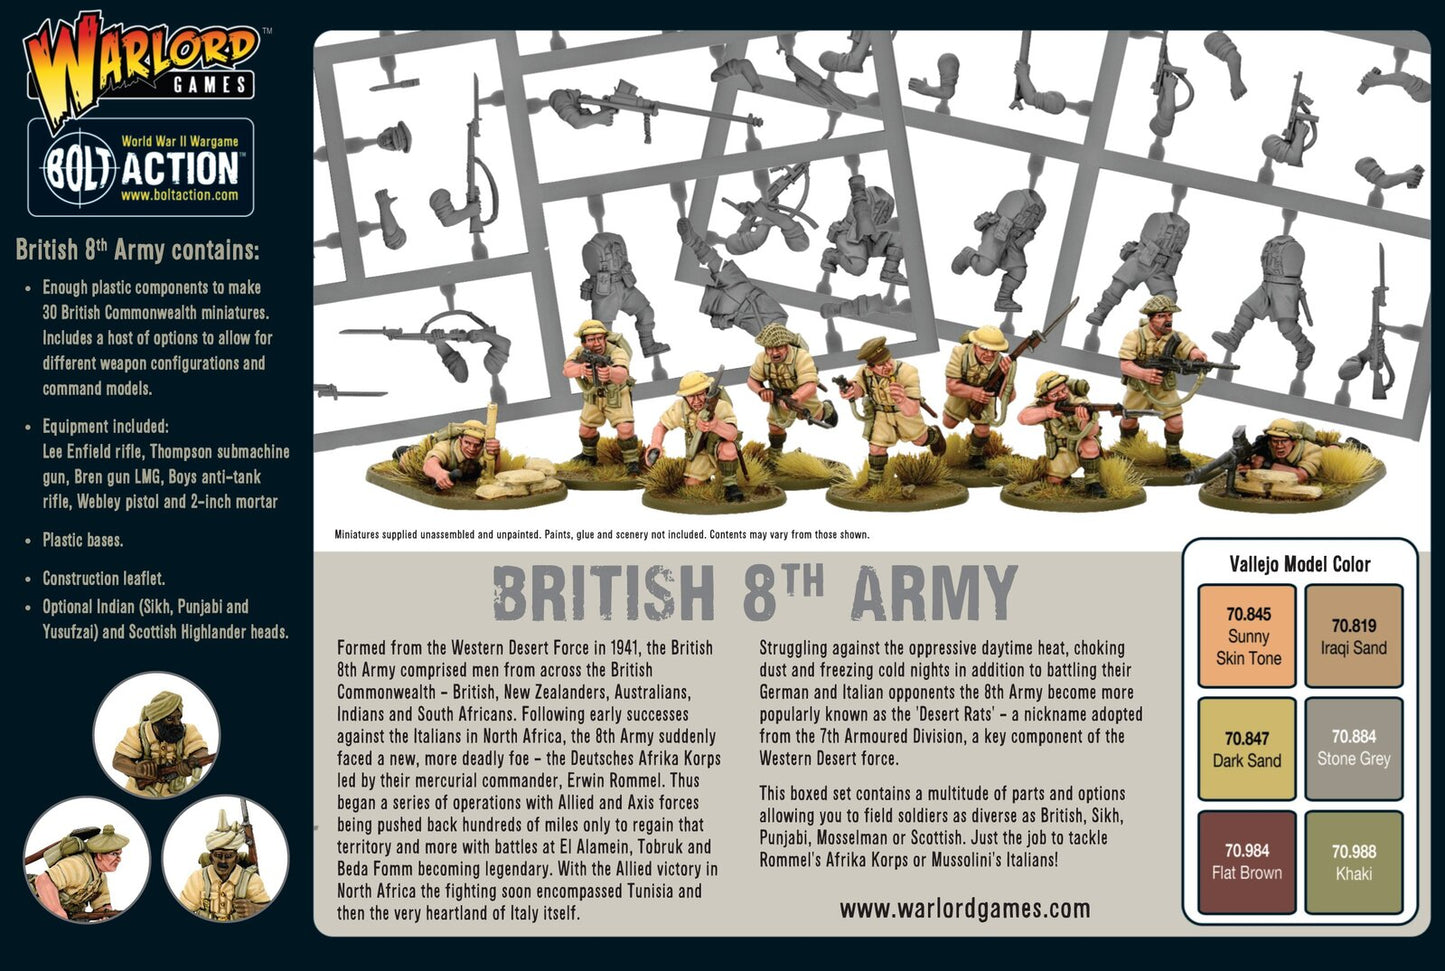 British 8th Army Infantry